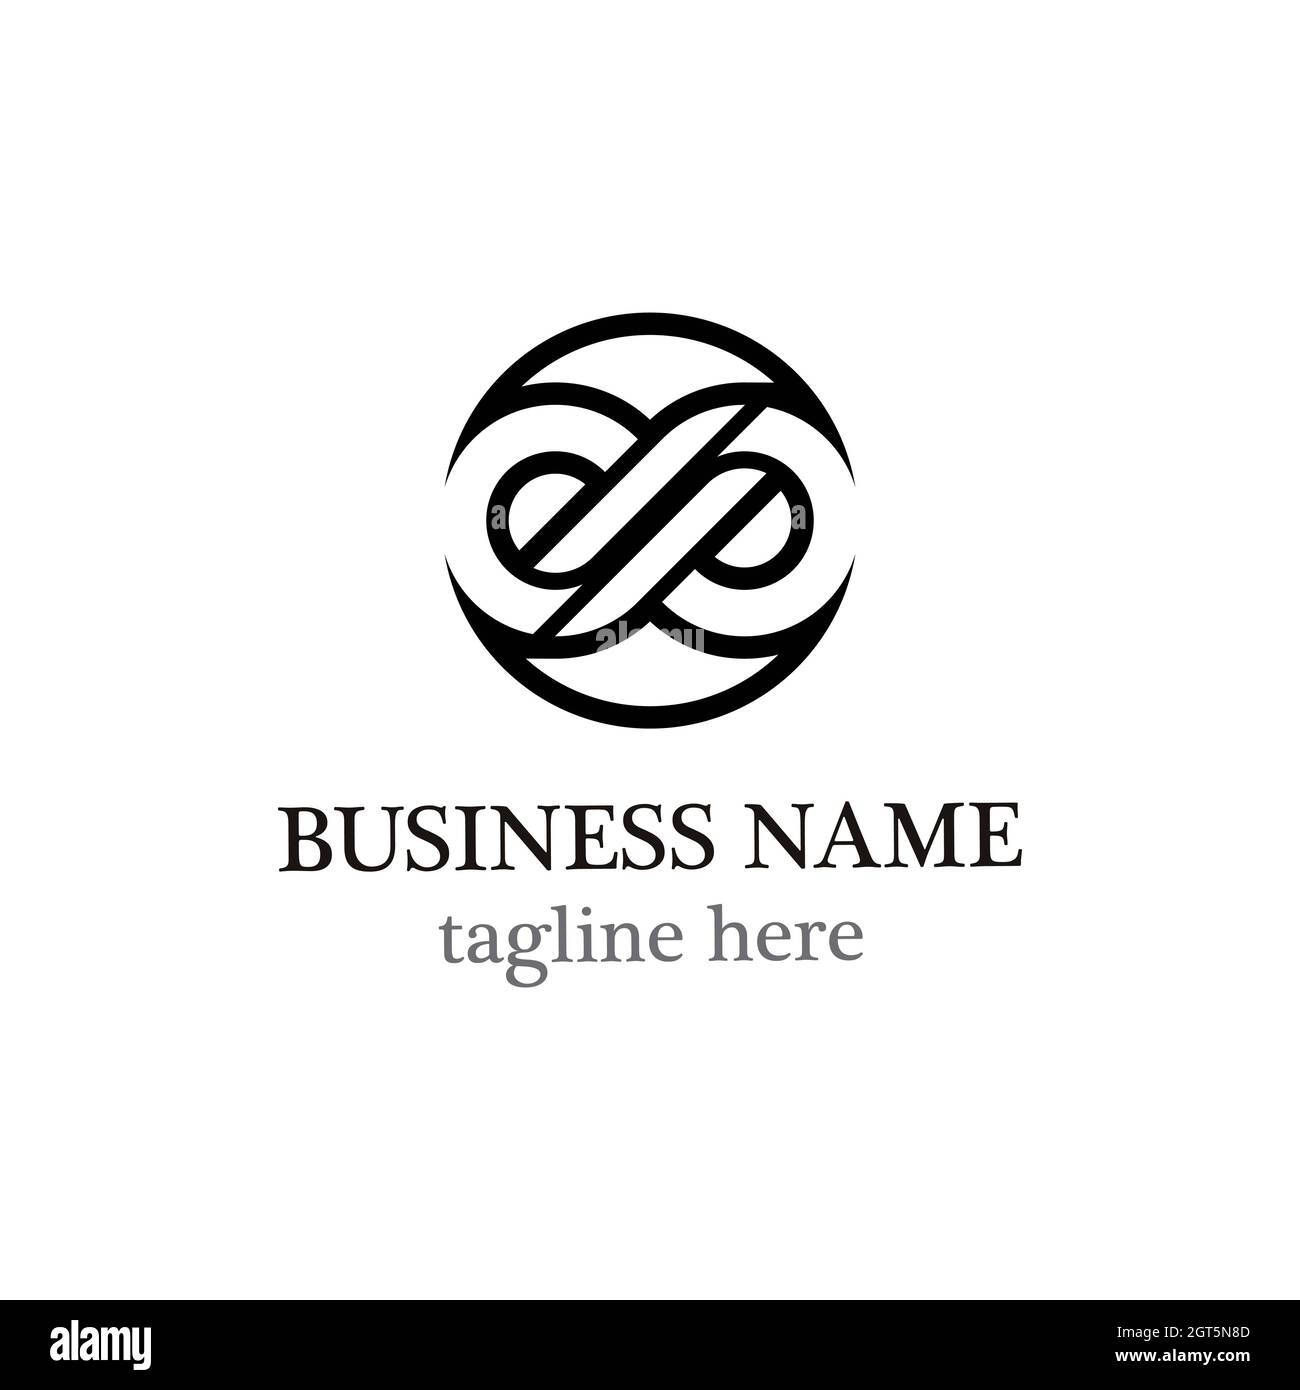 Infinity logo template vector design Stock Photo